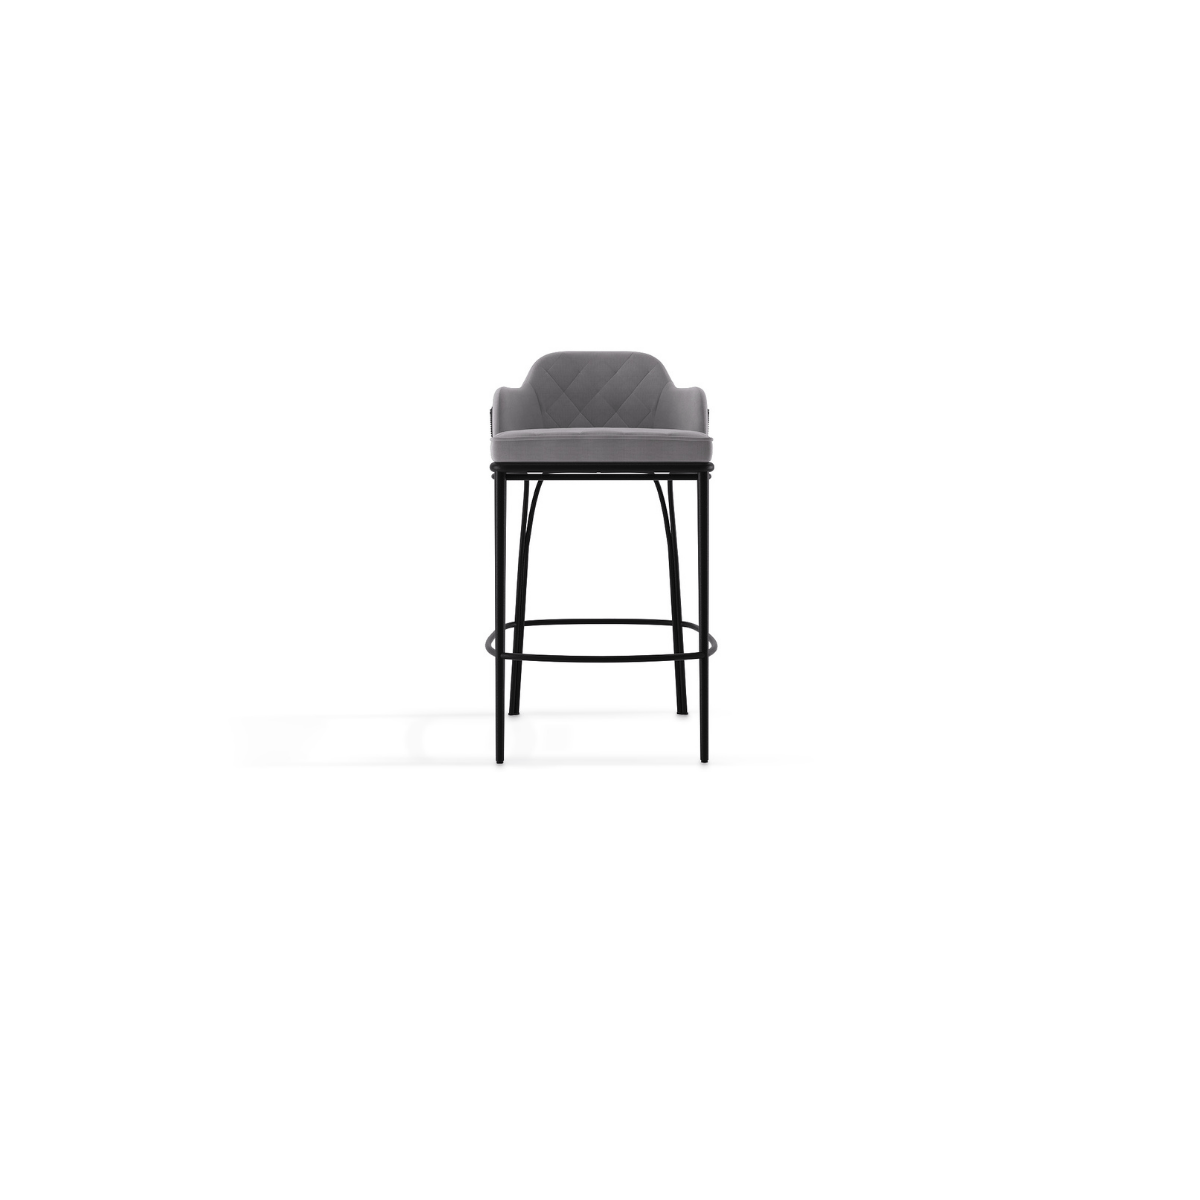 luxxu outdoor charla grey bar chair 01 Charla Grey Dining Chair